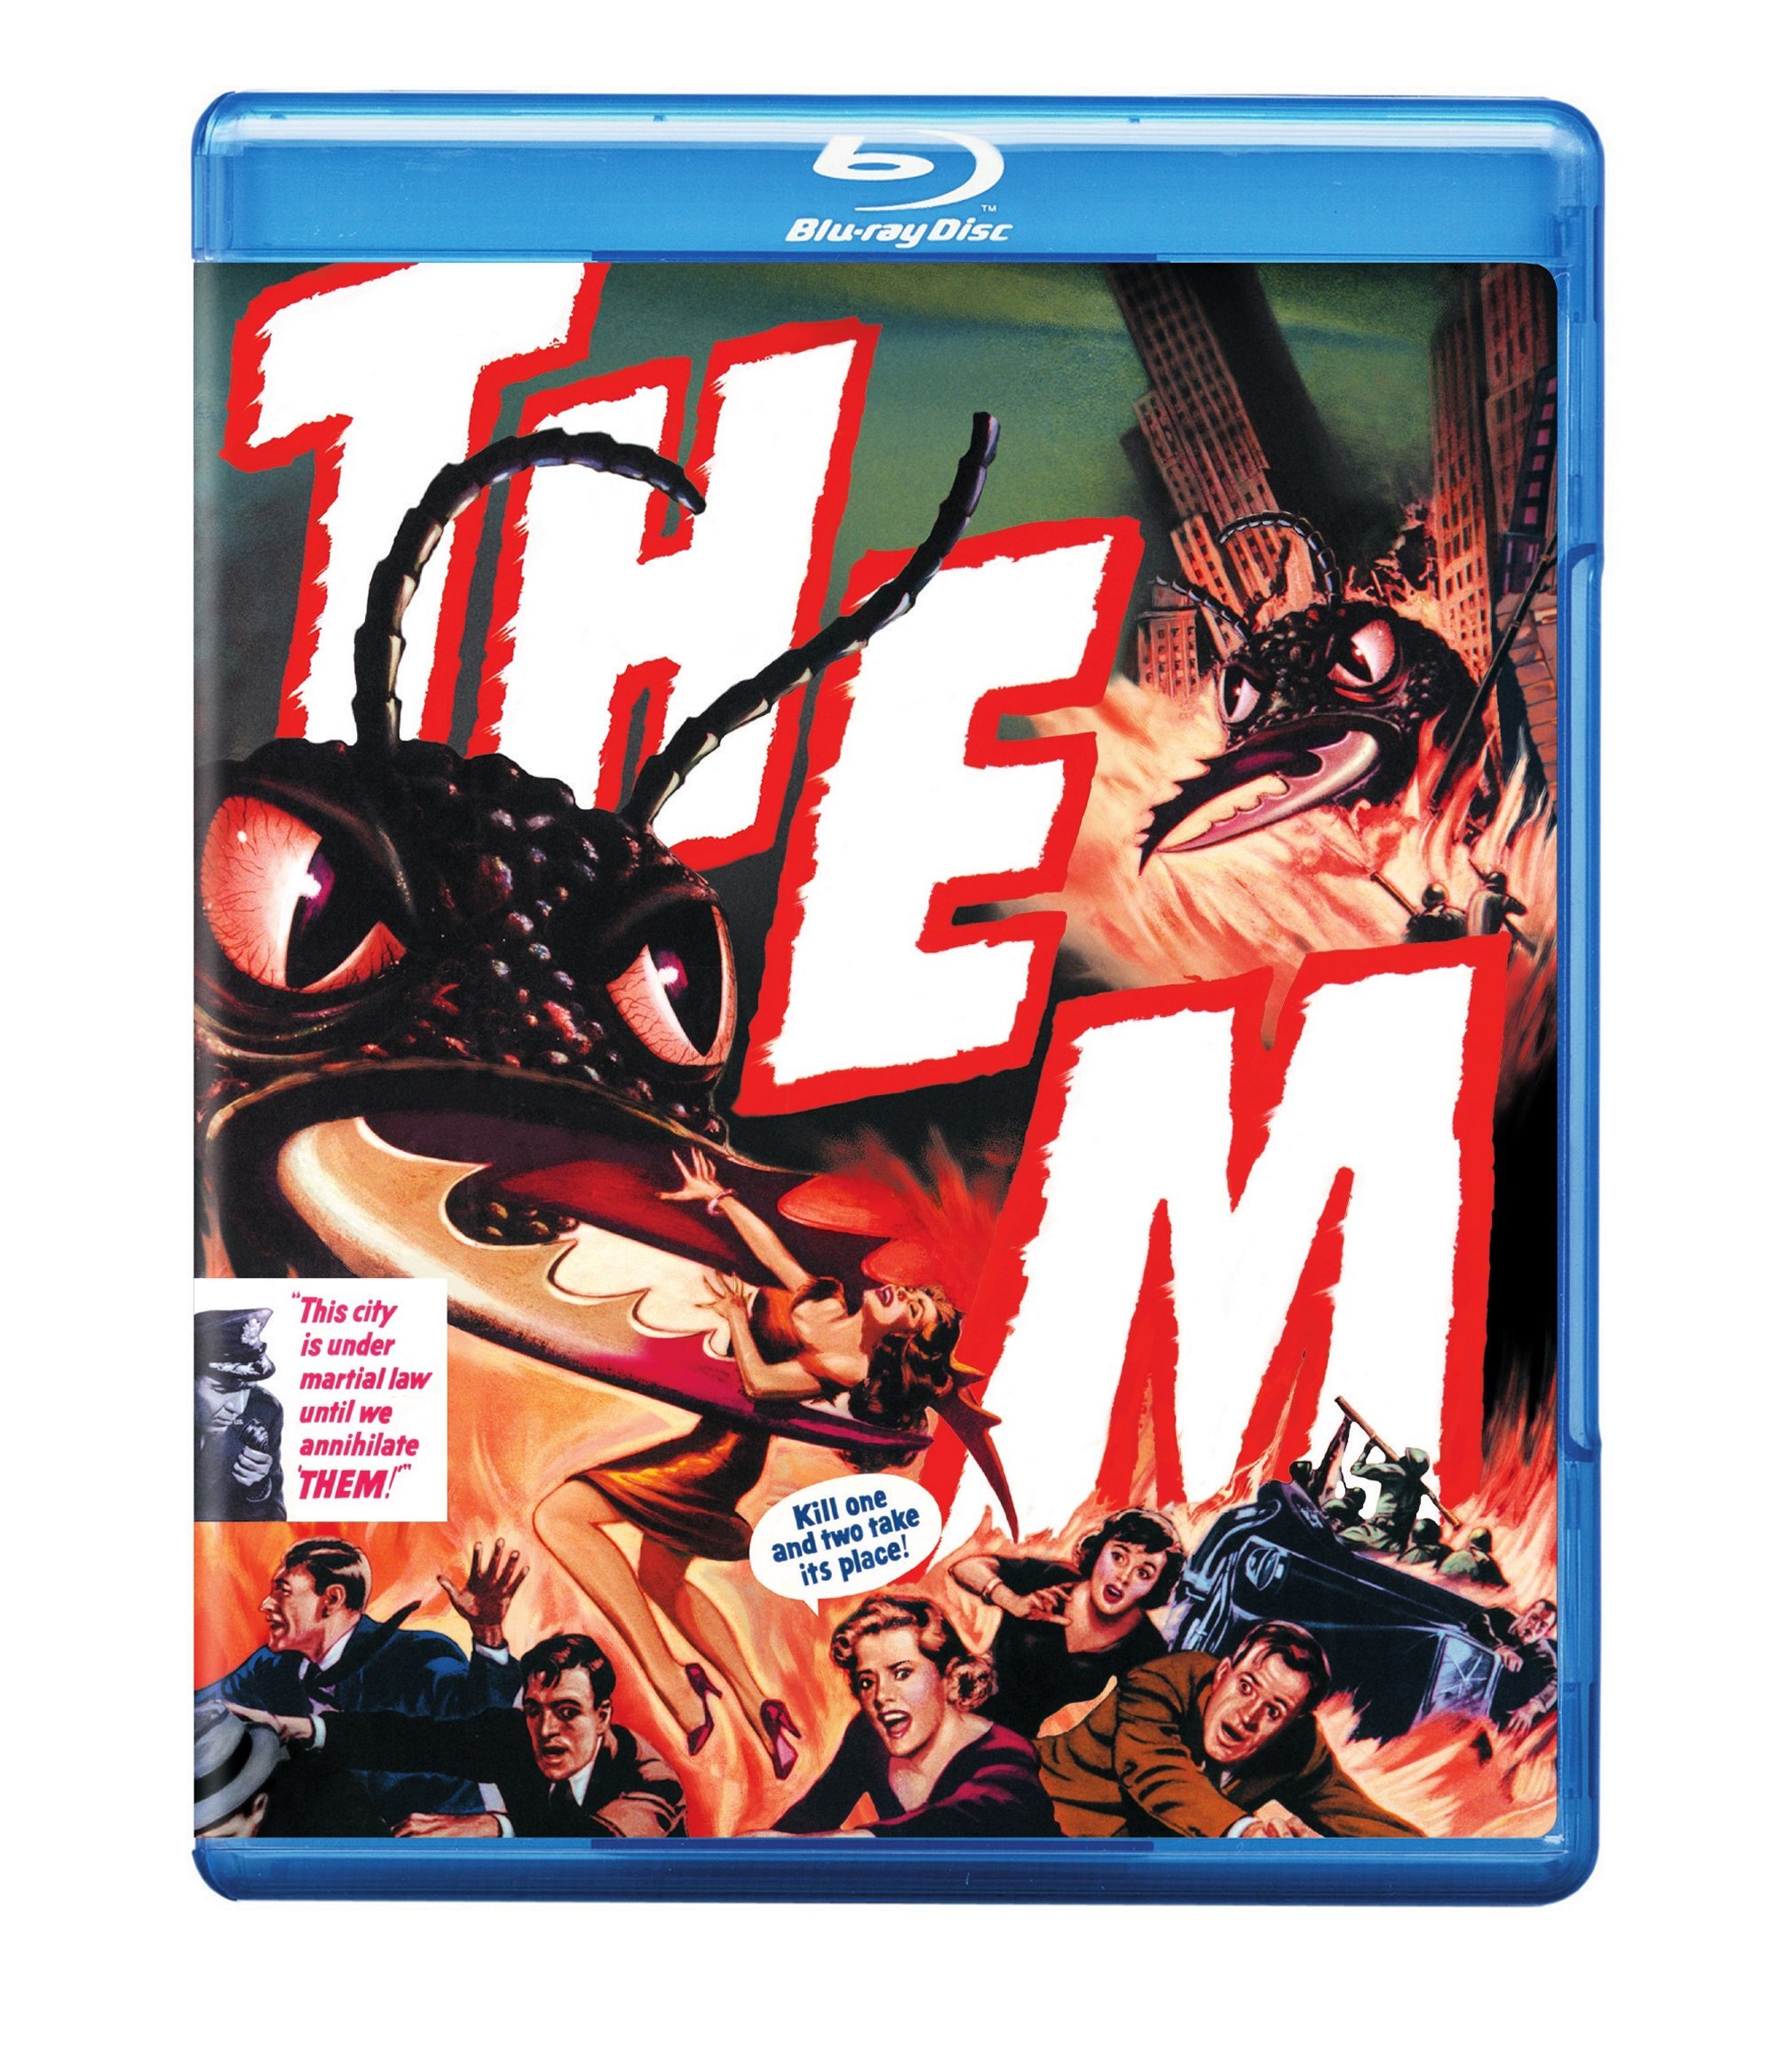 Them! - Blu-ray [ 1954 ]  - Modern Classic Movies On Blu-ray - Movies On GRUV